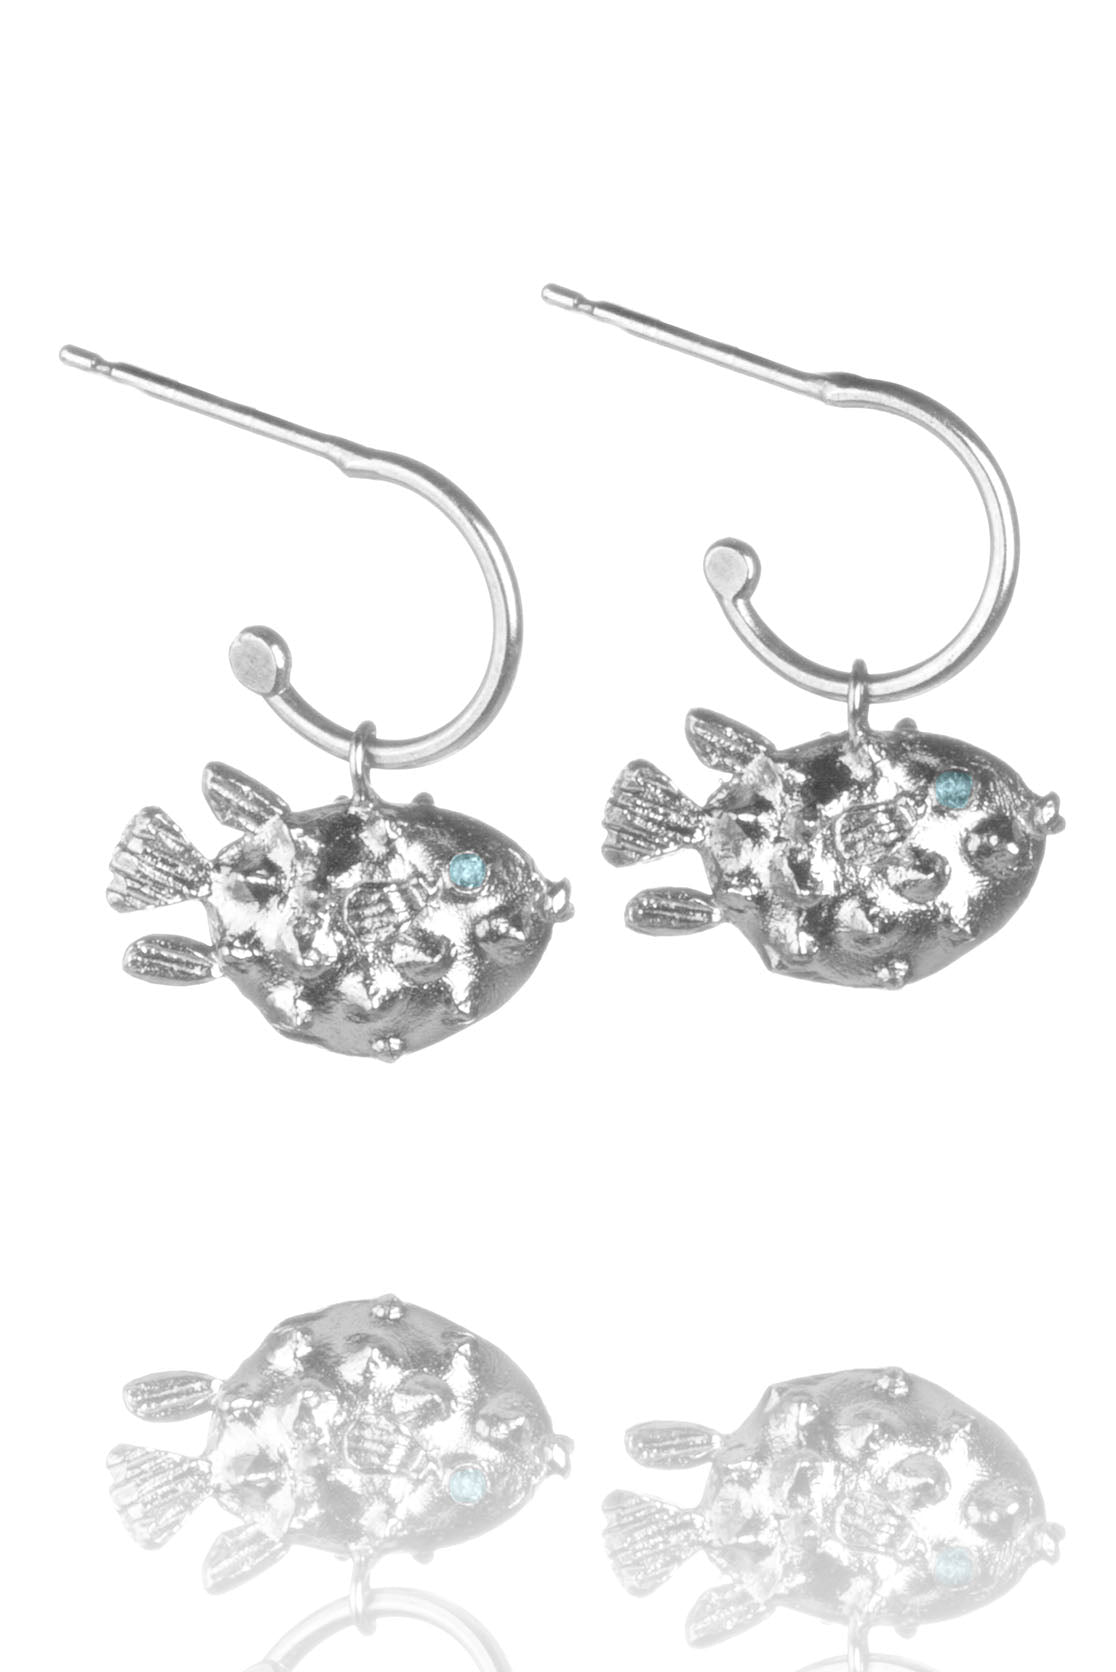 Puffer Fish Earrings